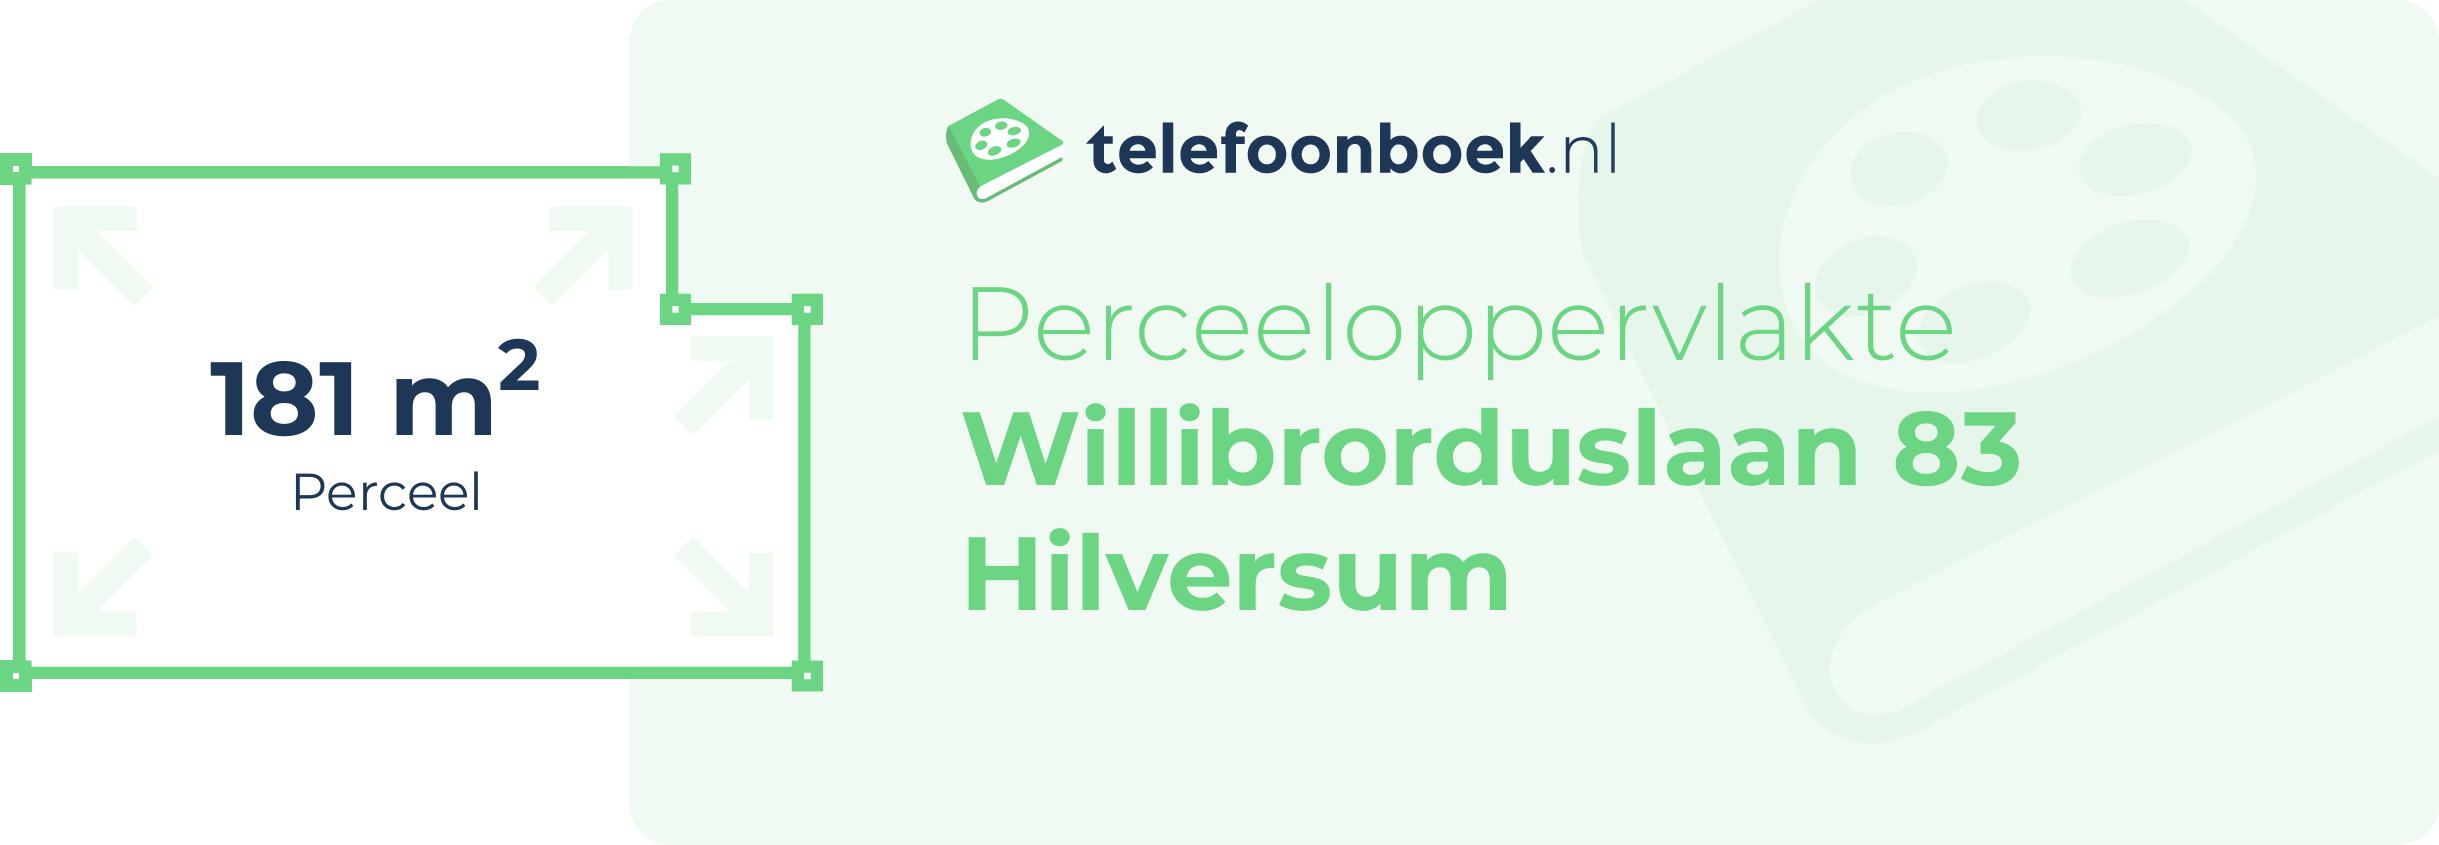 Perceeloppervlakte Willibrorduslaan 83 Hilversum